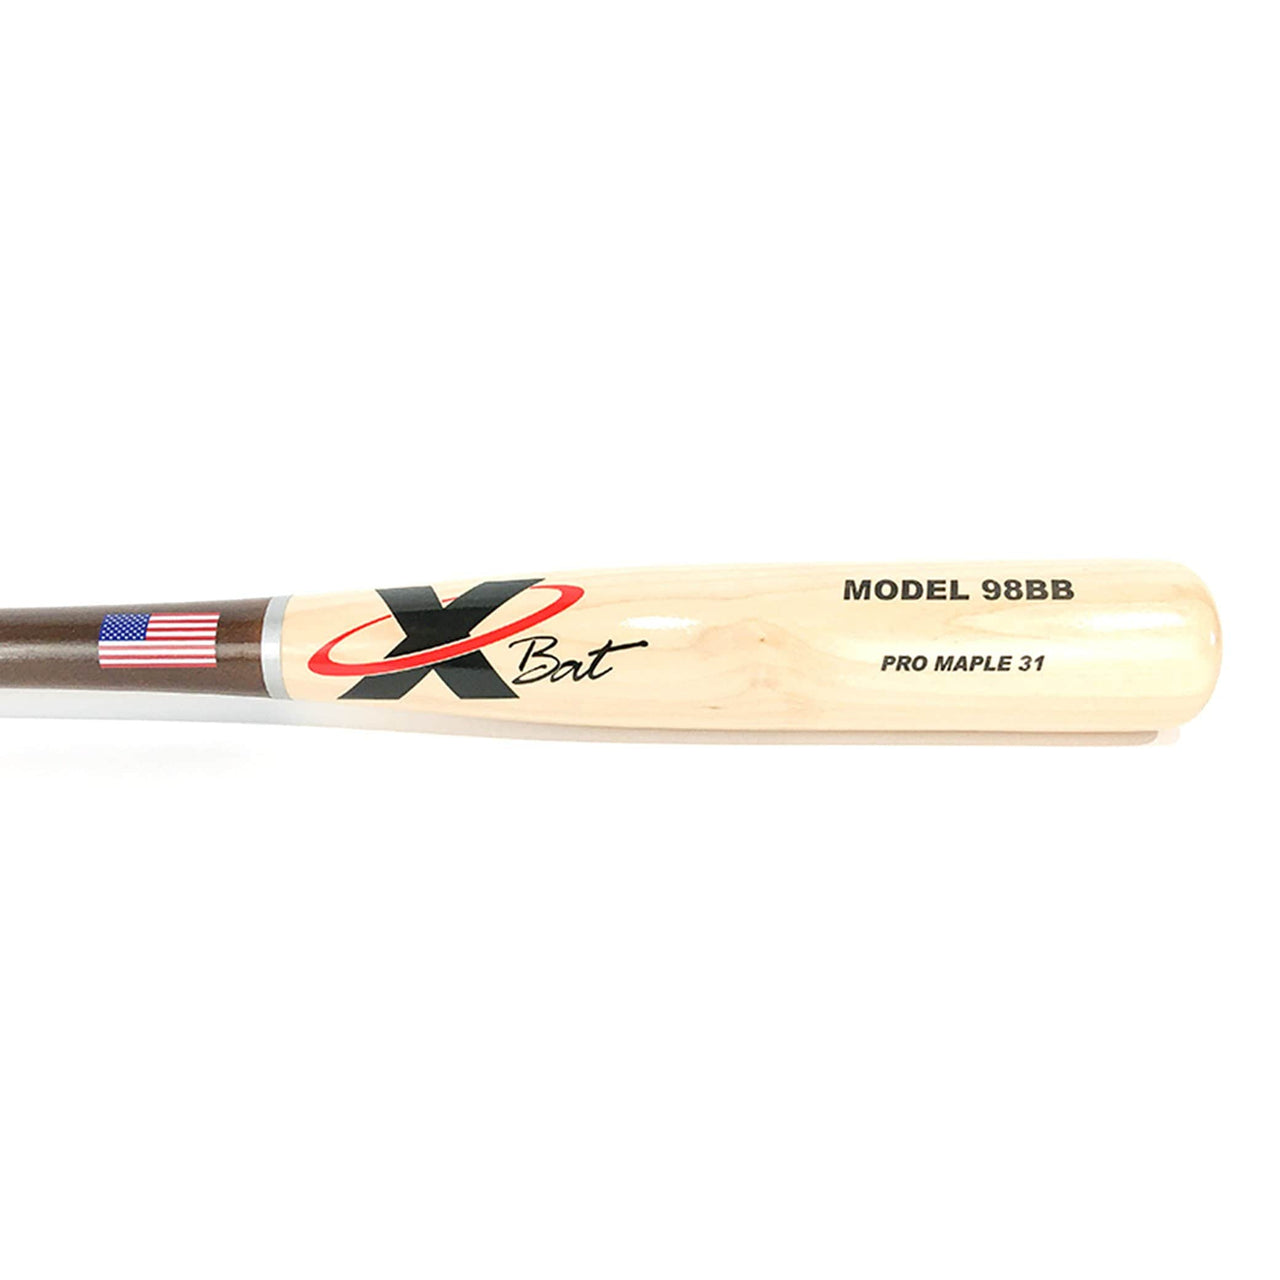 Playing Bats X-Bat X-Bat Model 98BB Wood Baseball Bat | Maple